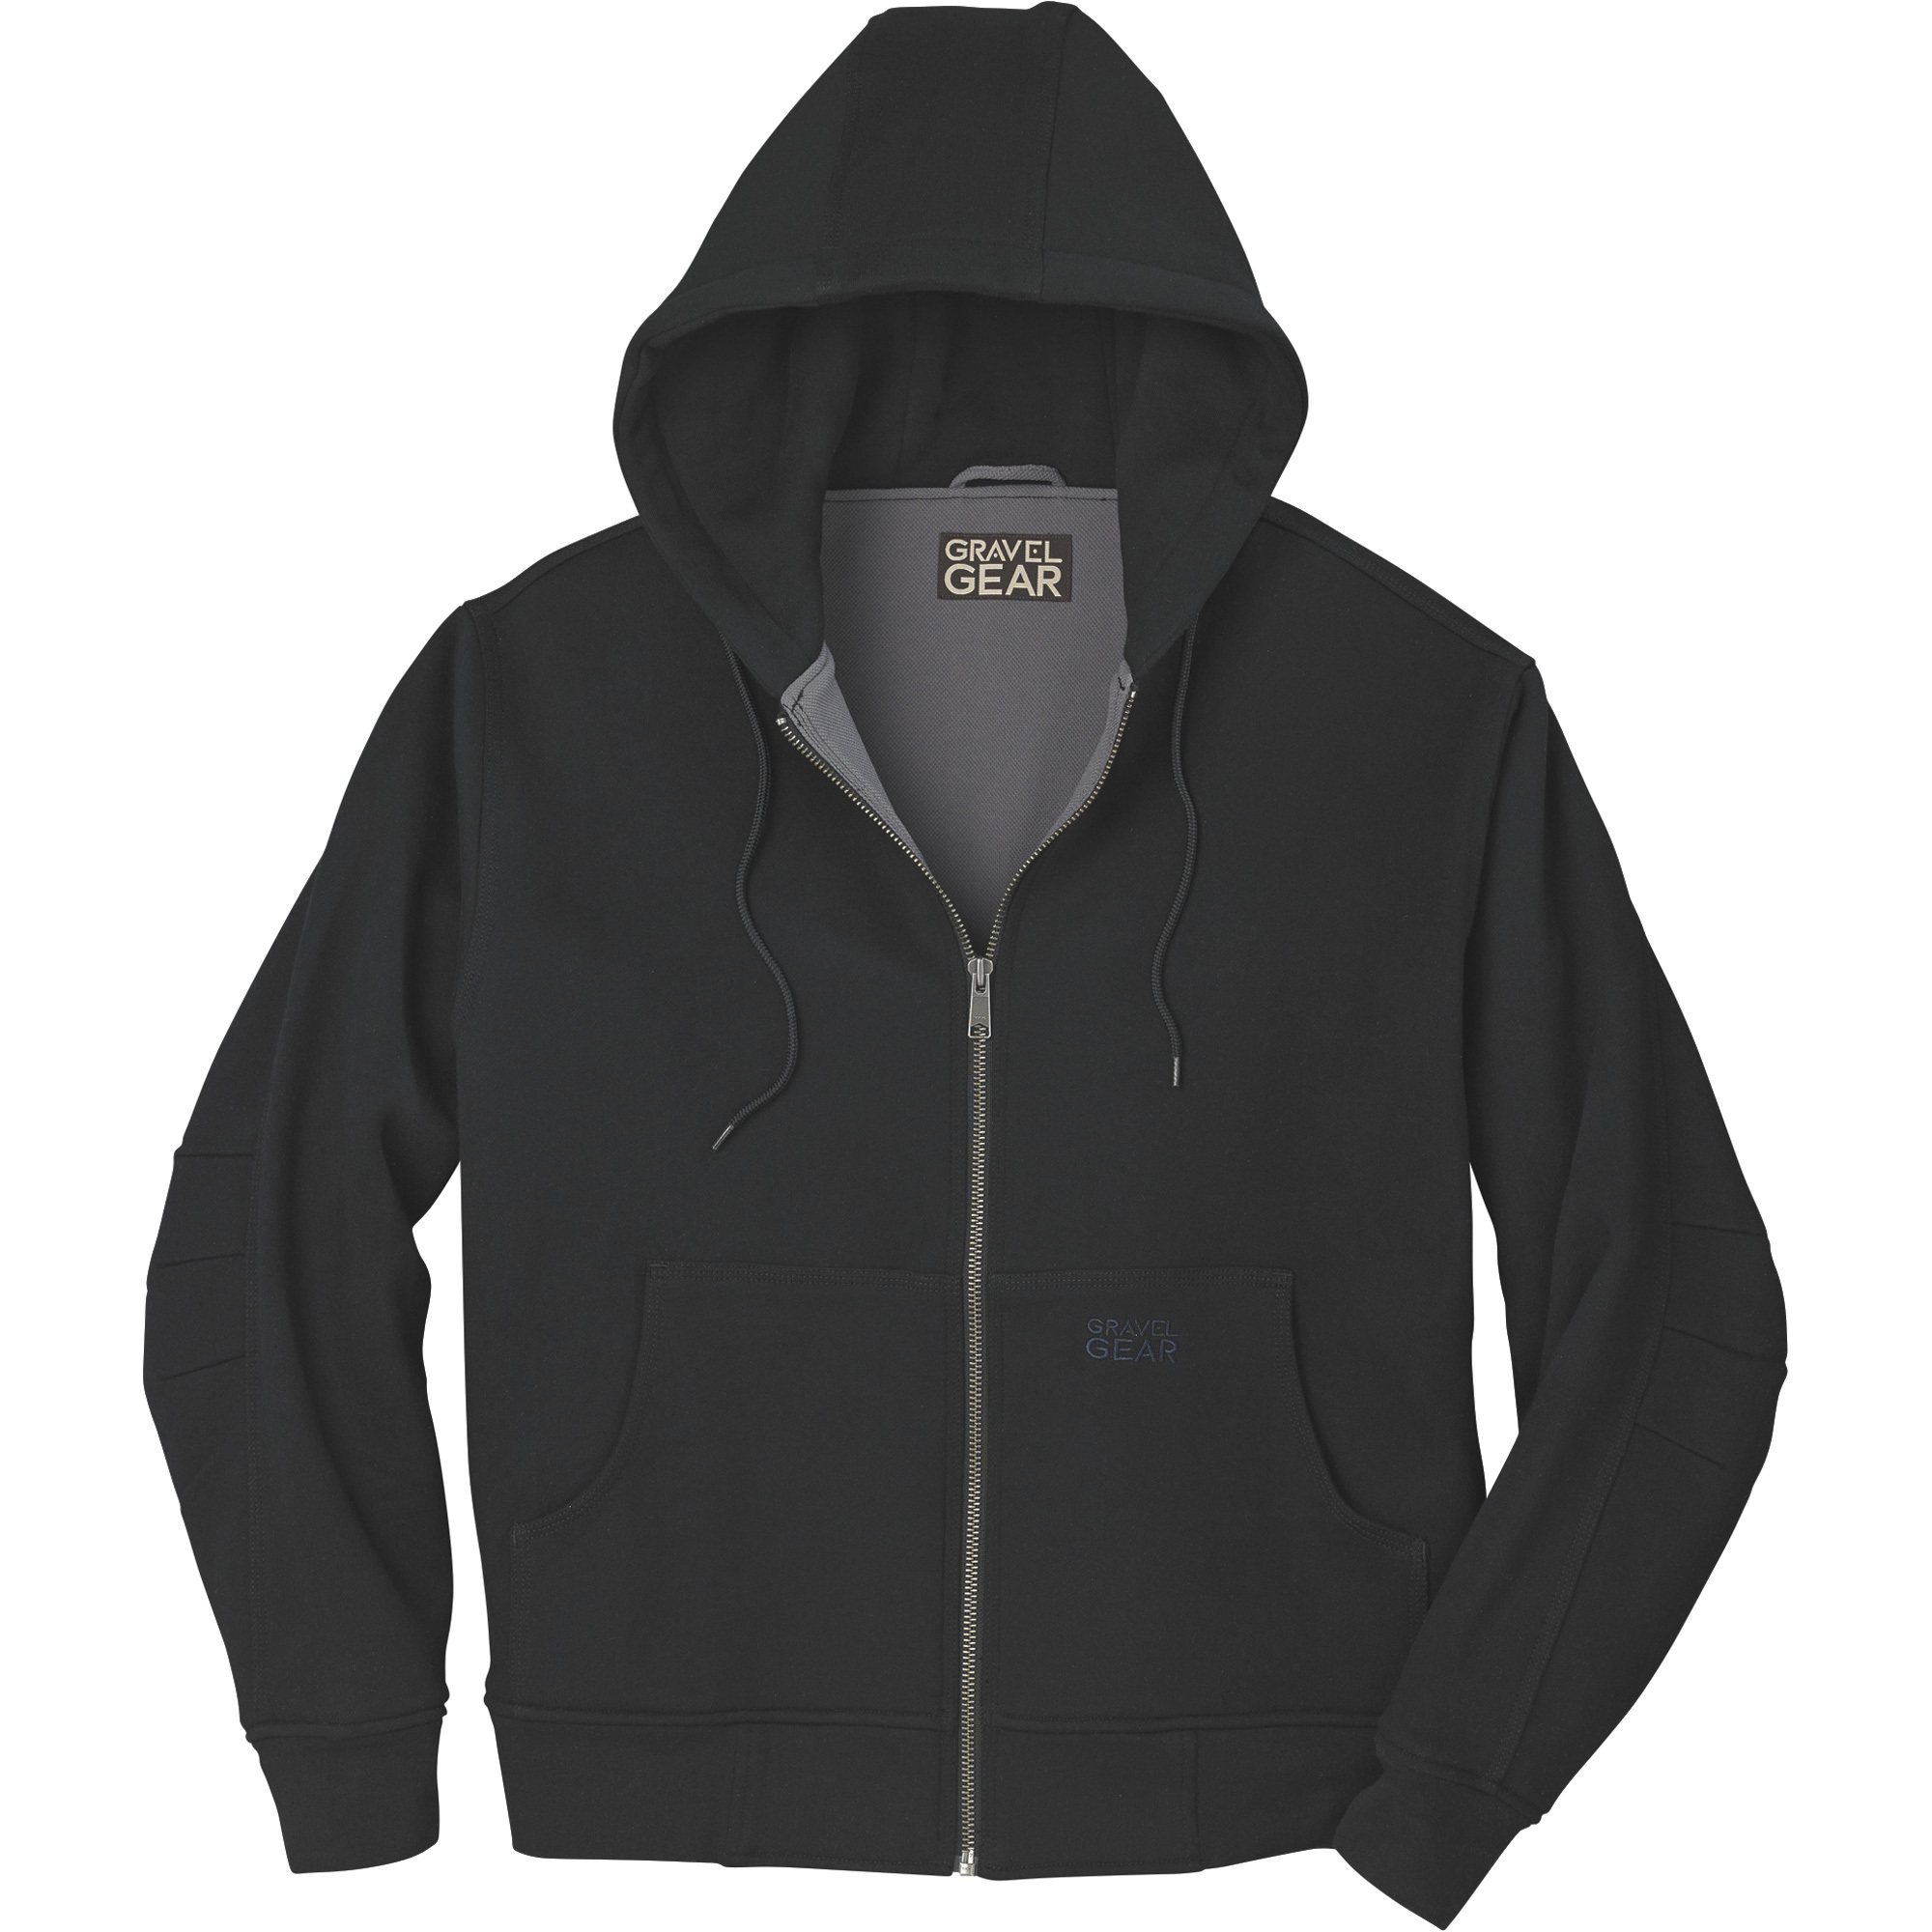 Gravel Gear Men's Hooded Thermal-Lined Sweatshirt - Black, XL